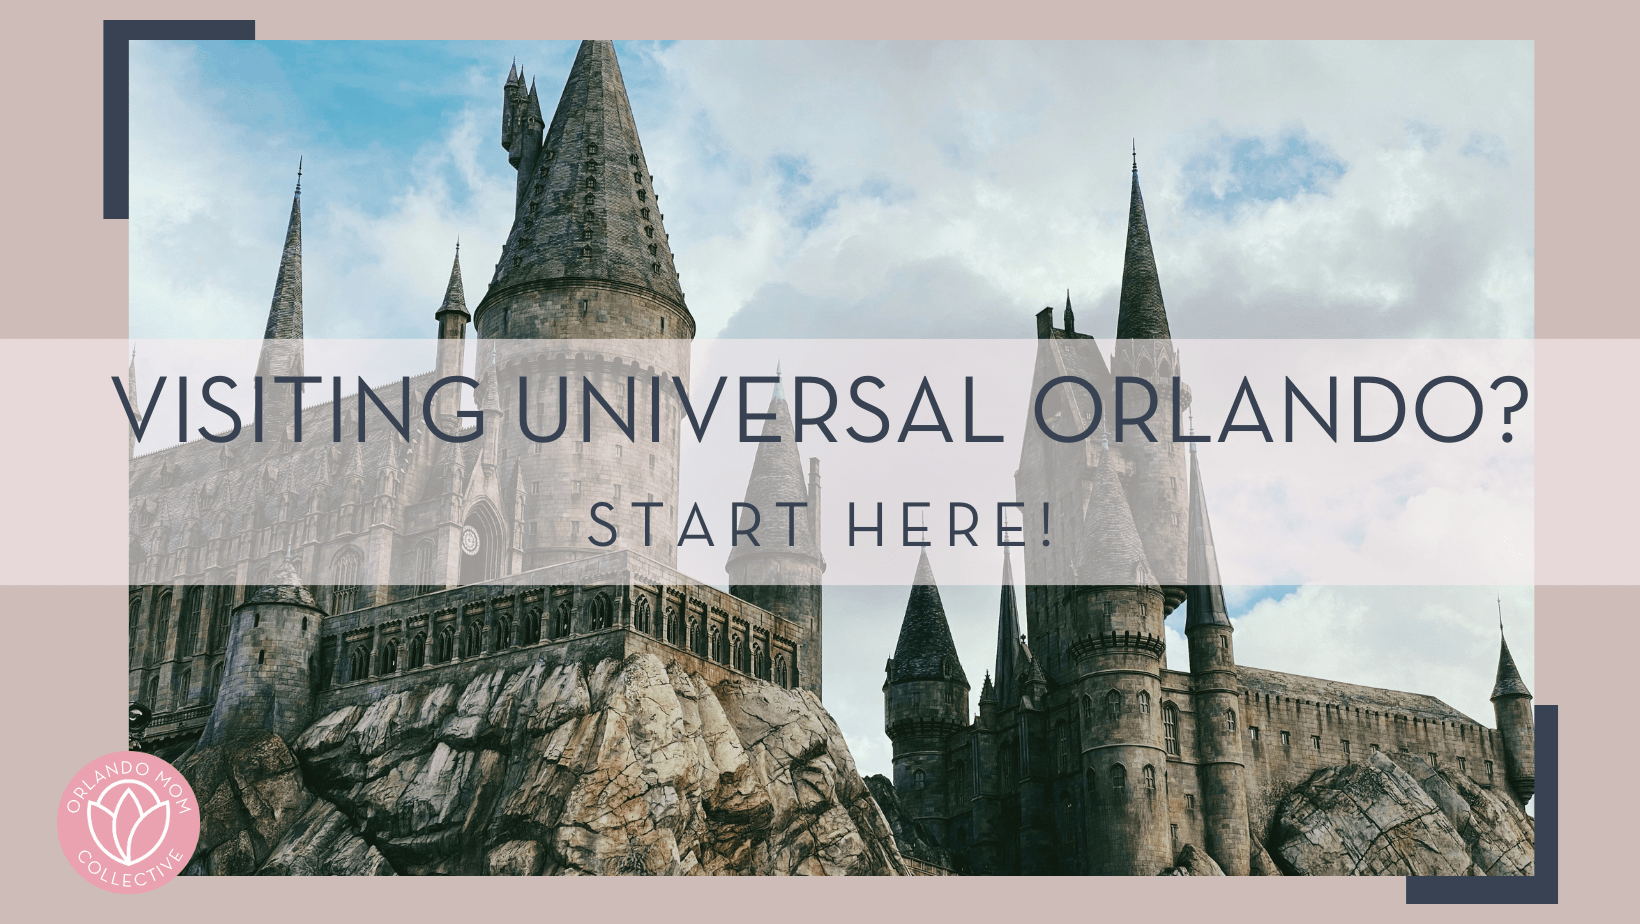 jules marvin eguilo via unsplash image of Hogwarts castle in Universal Orlando with 'visiting universal Orlando? start here!' in text in front.